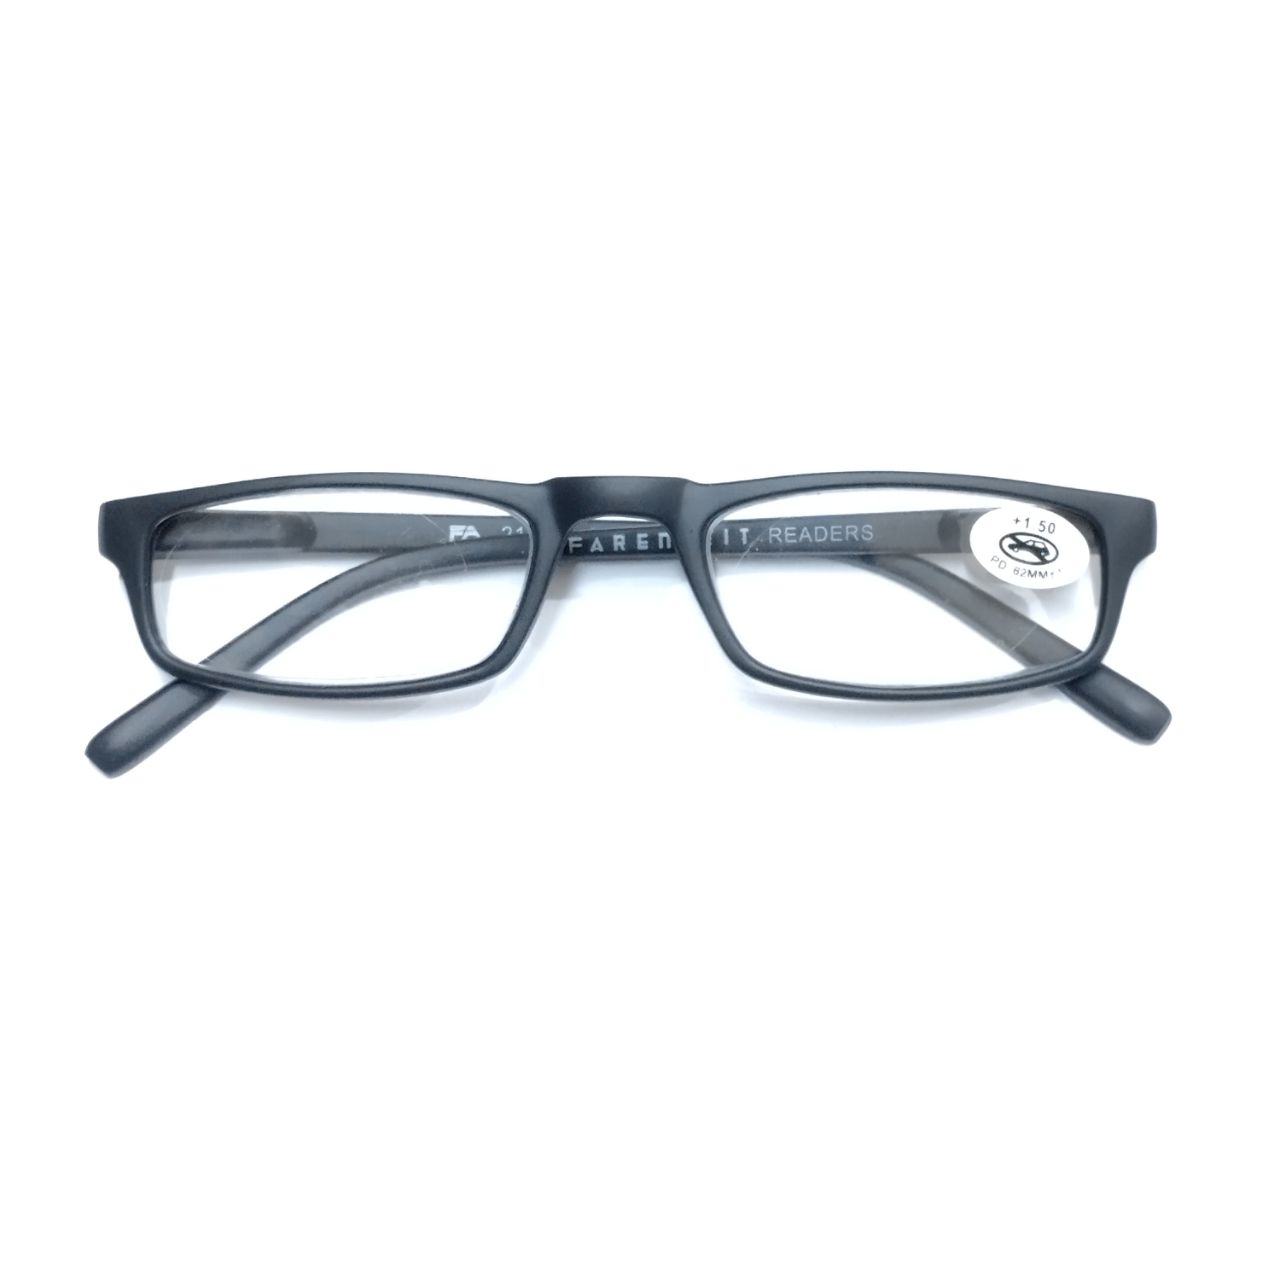 Black Computer Reading Glasses For Men with Blue Light Lenses 211mbk